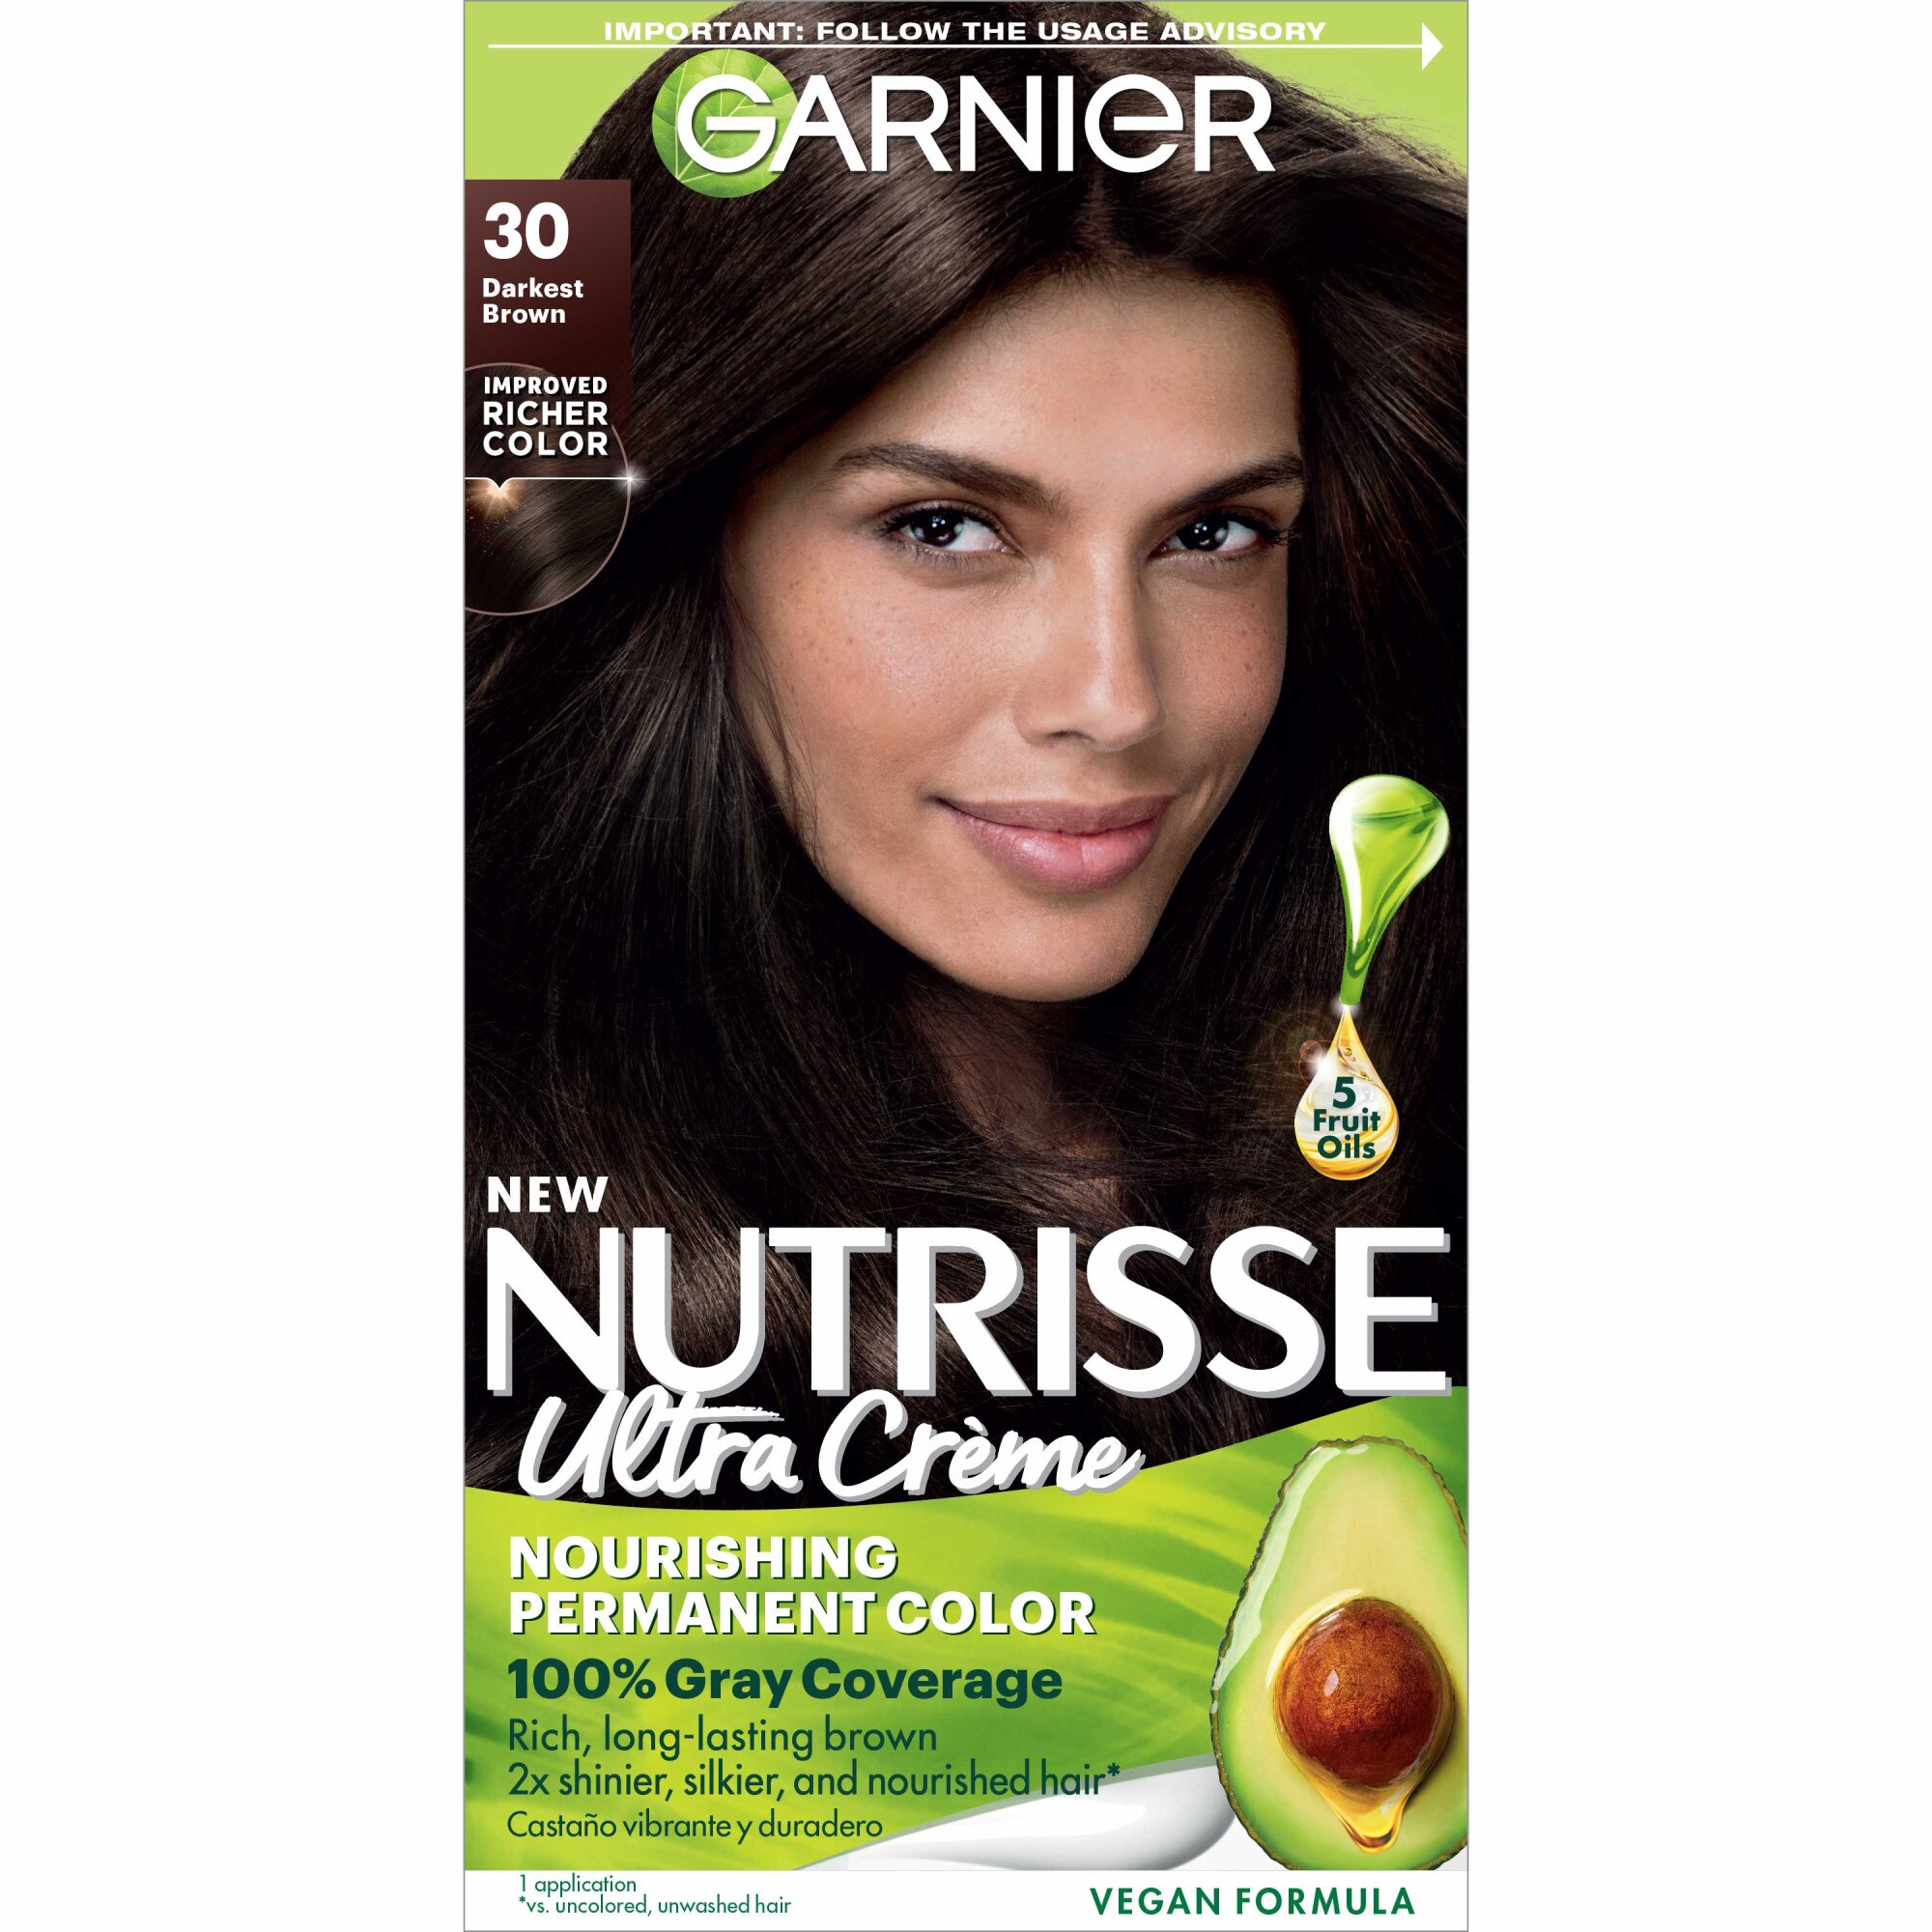 Garnier Nutrisse Nourishing Permanent Hair Color Creme, 30 Darkest Brown - 1 , CVS